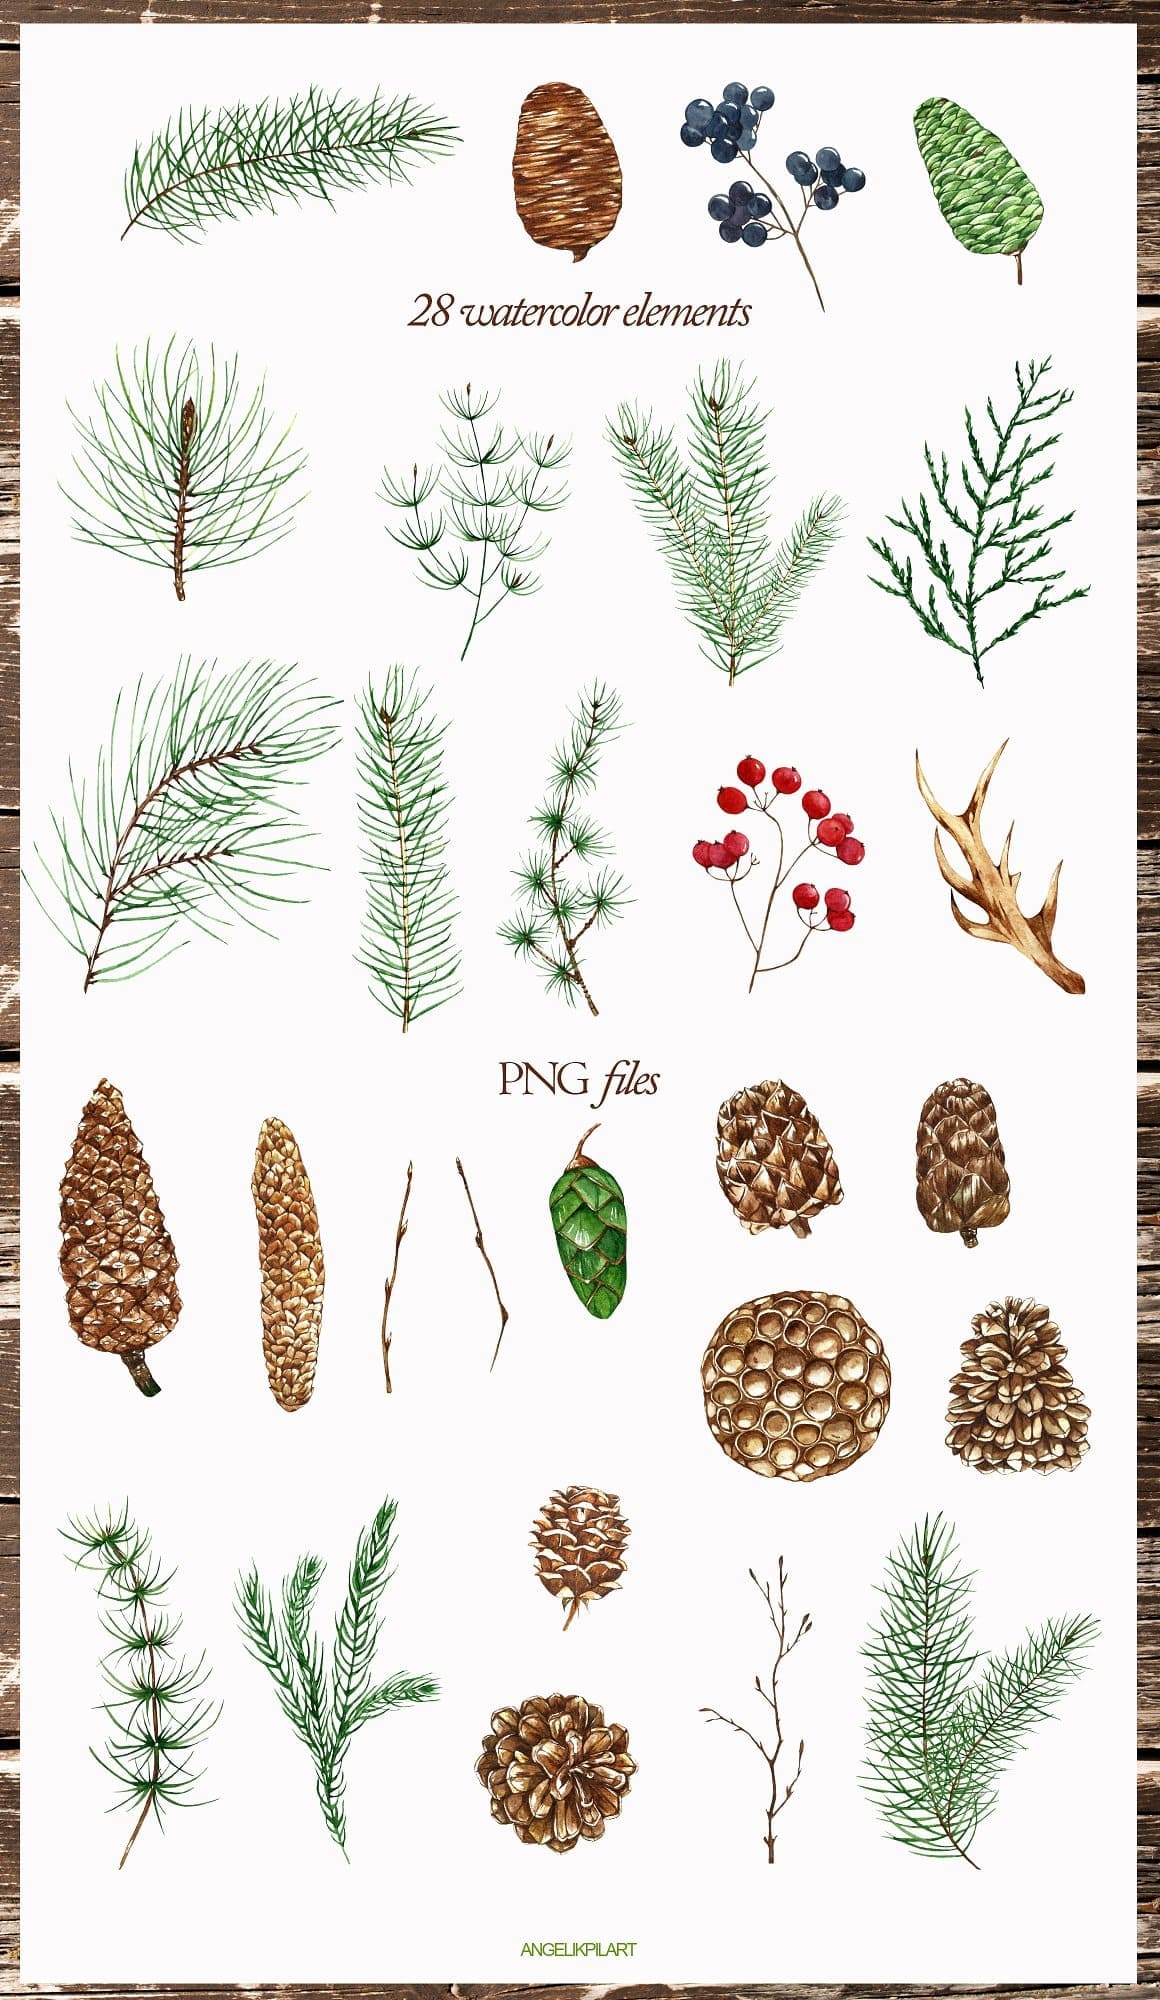 28 watercolor elements of coniferous trees.